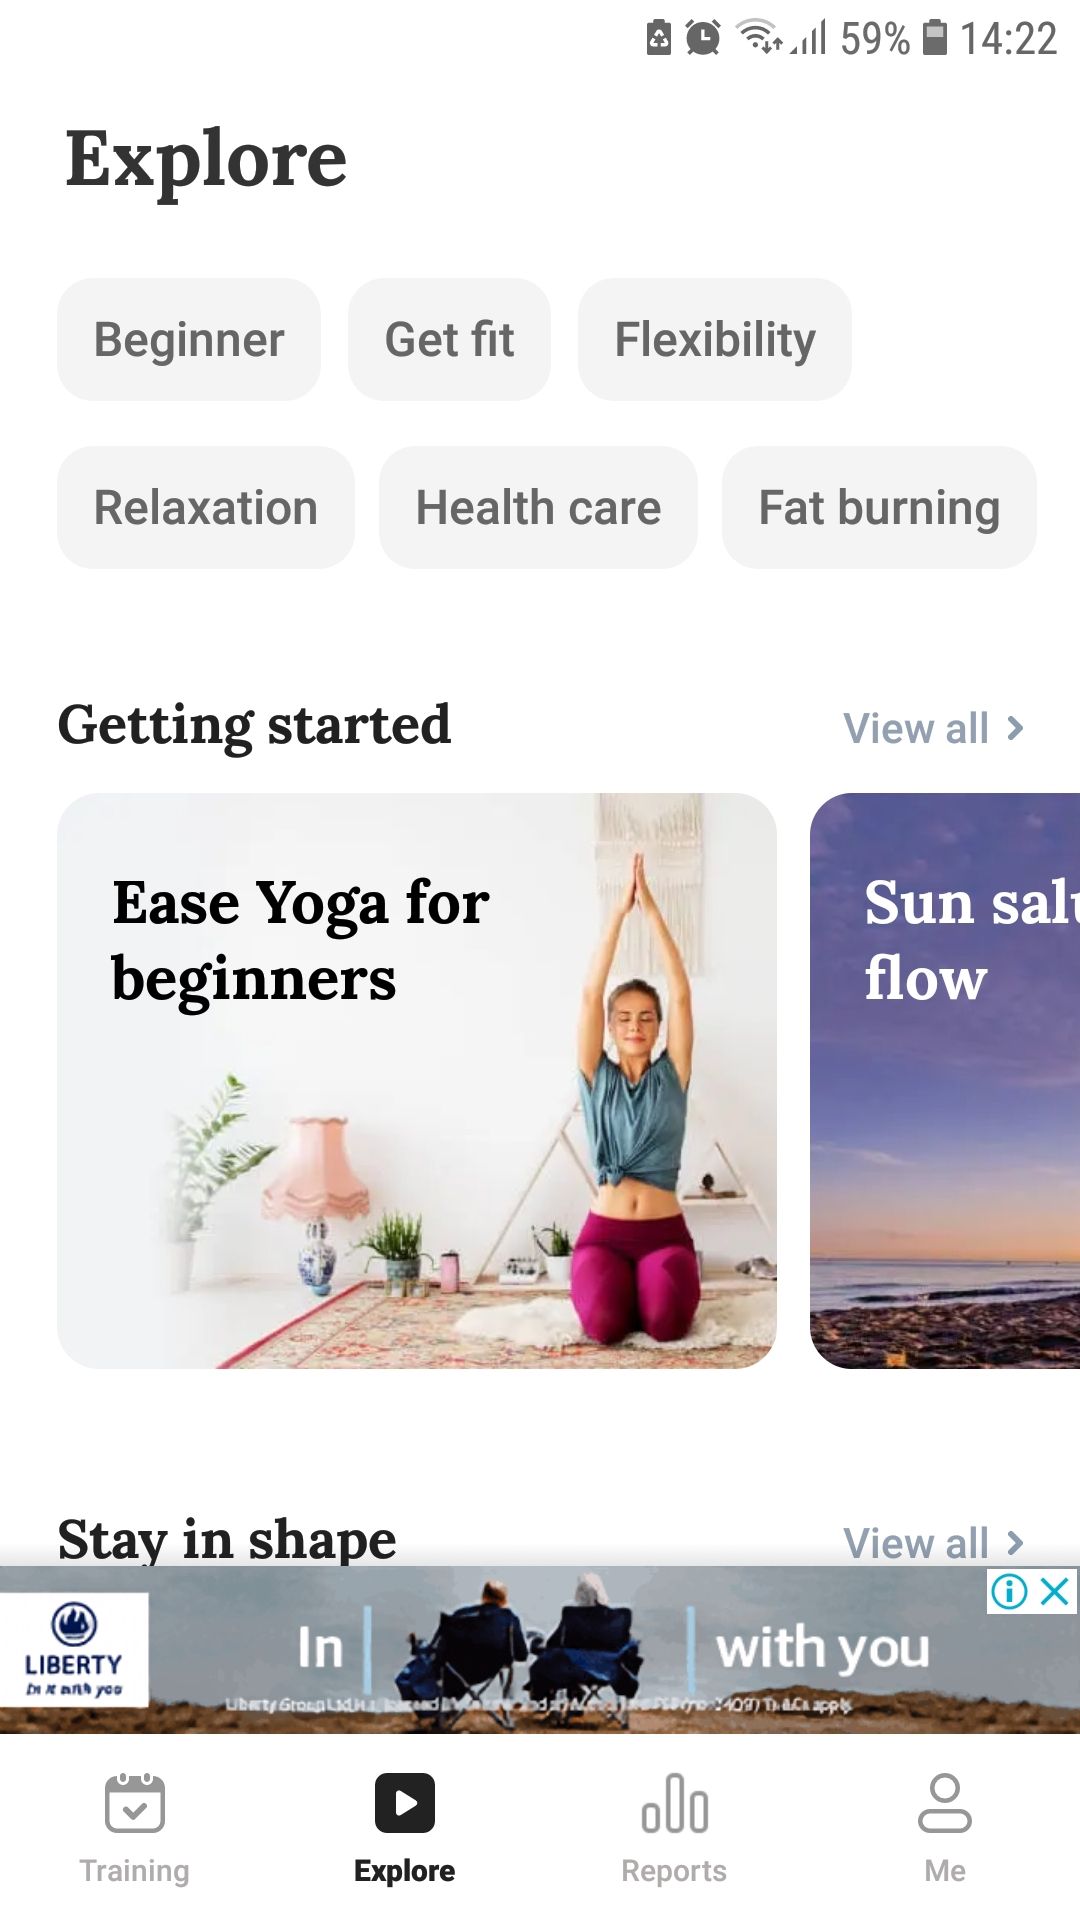 Yoga for Beginners mobile yoga fitness app explore